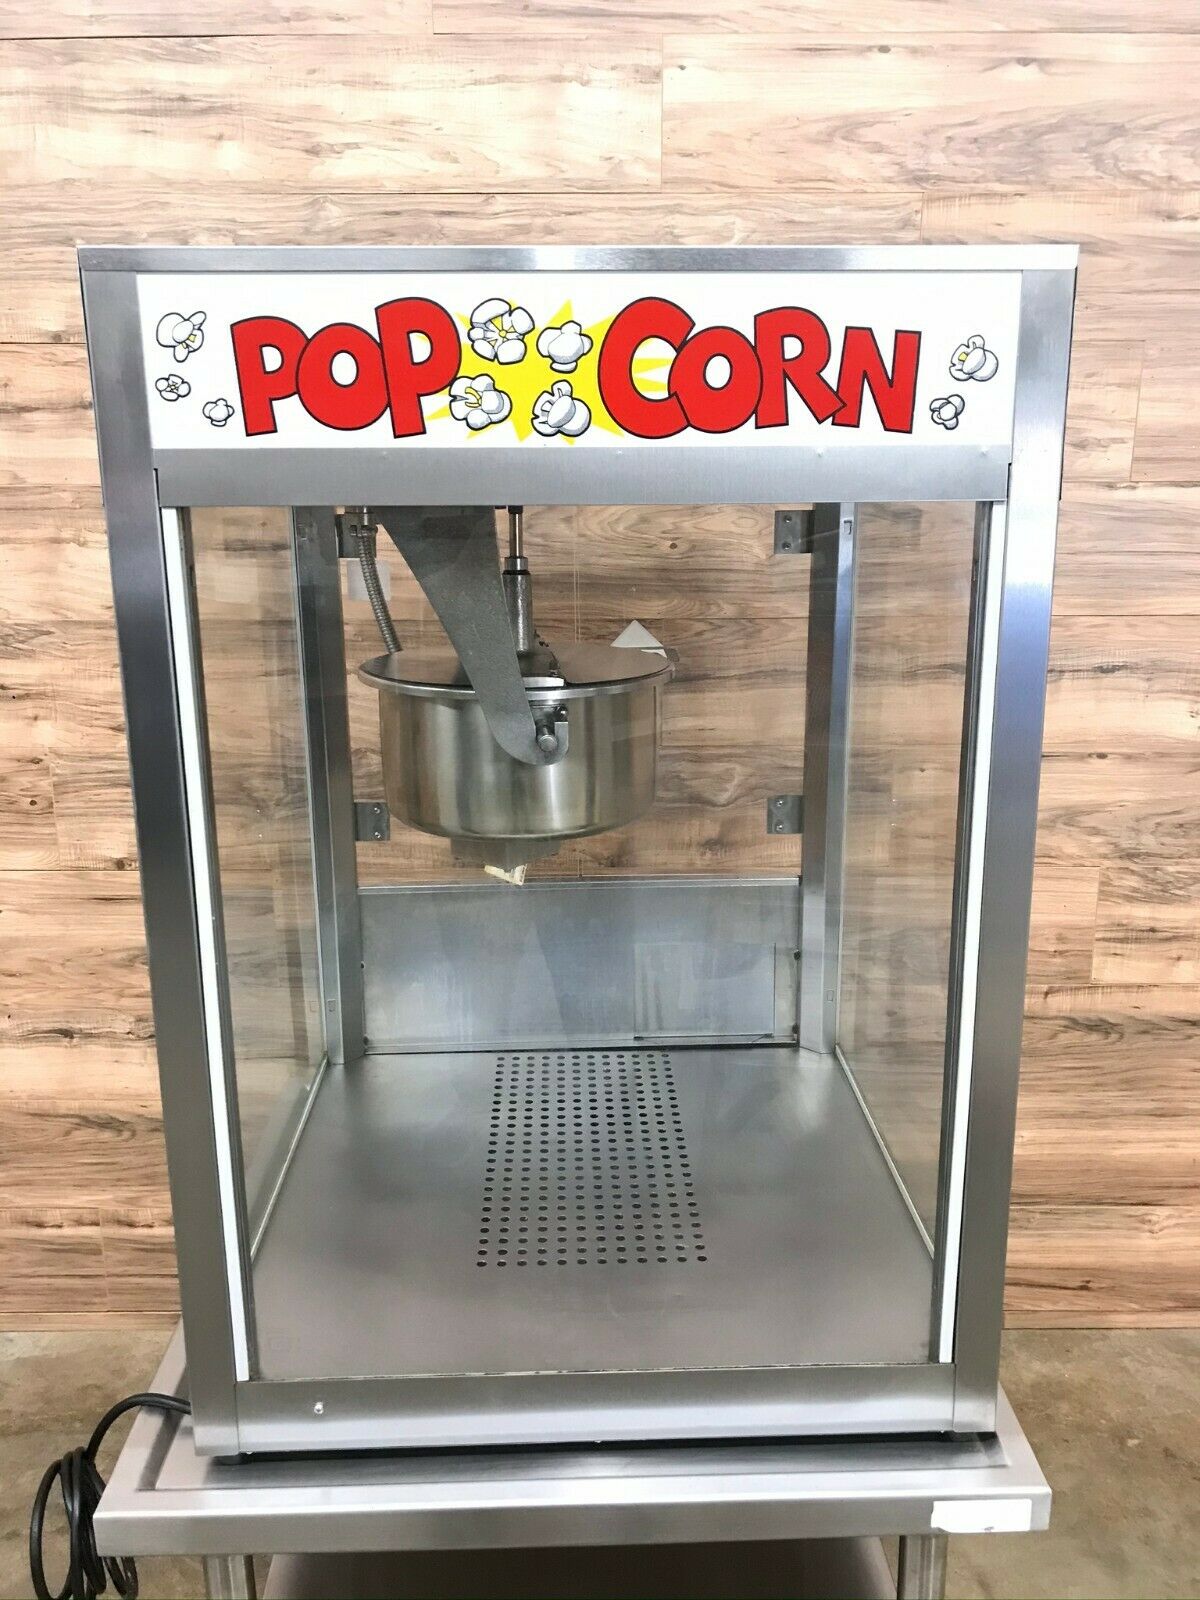 gold medal popcorn machine